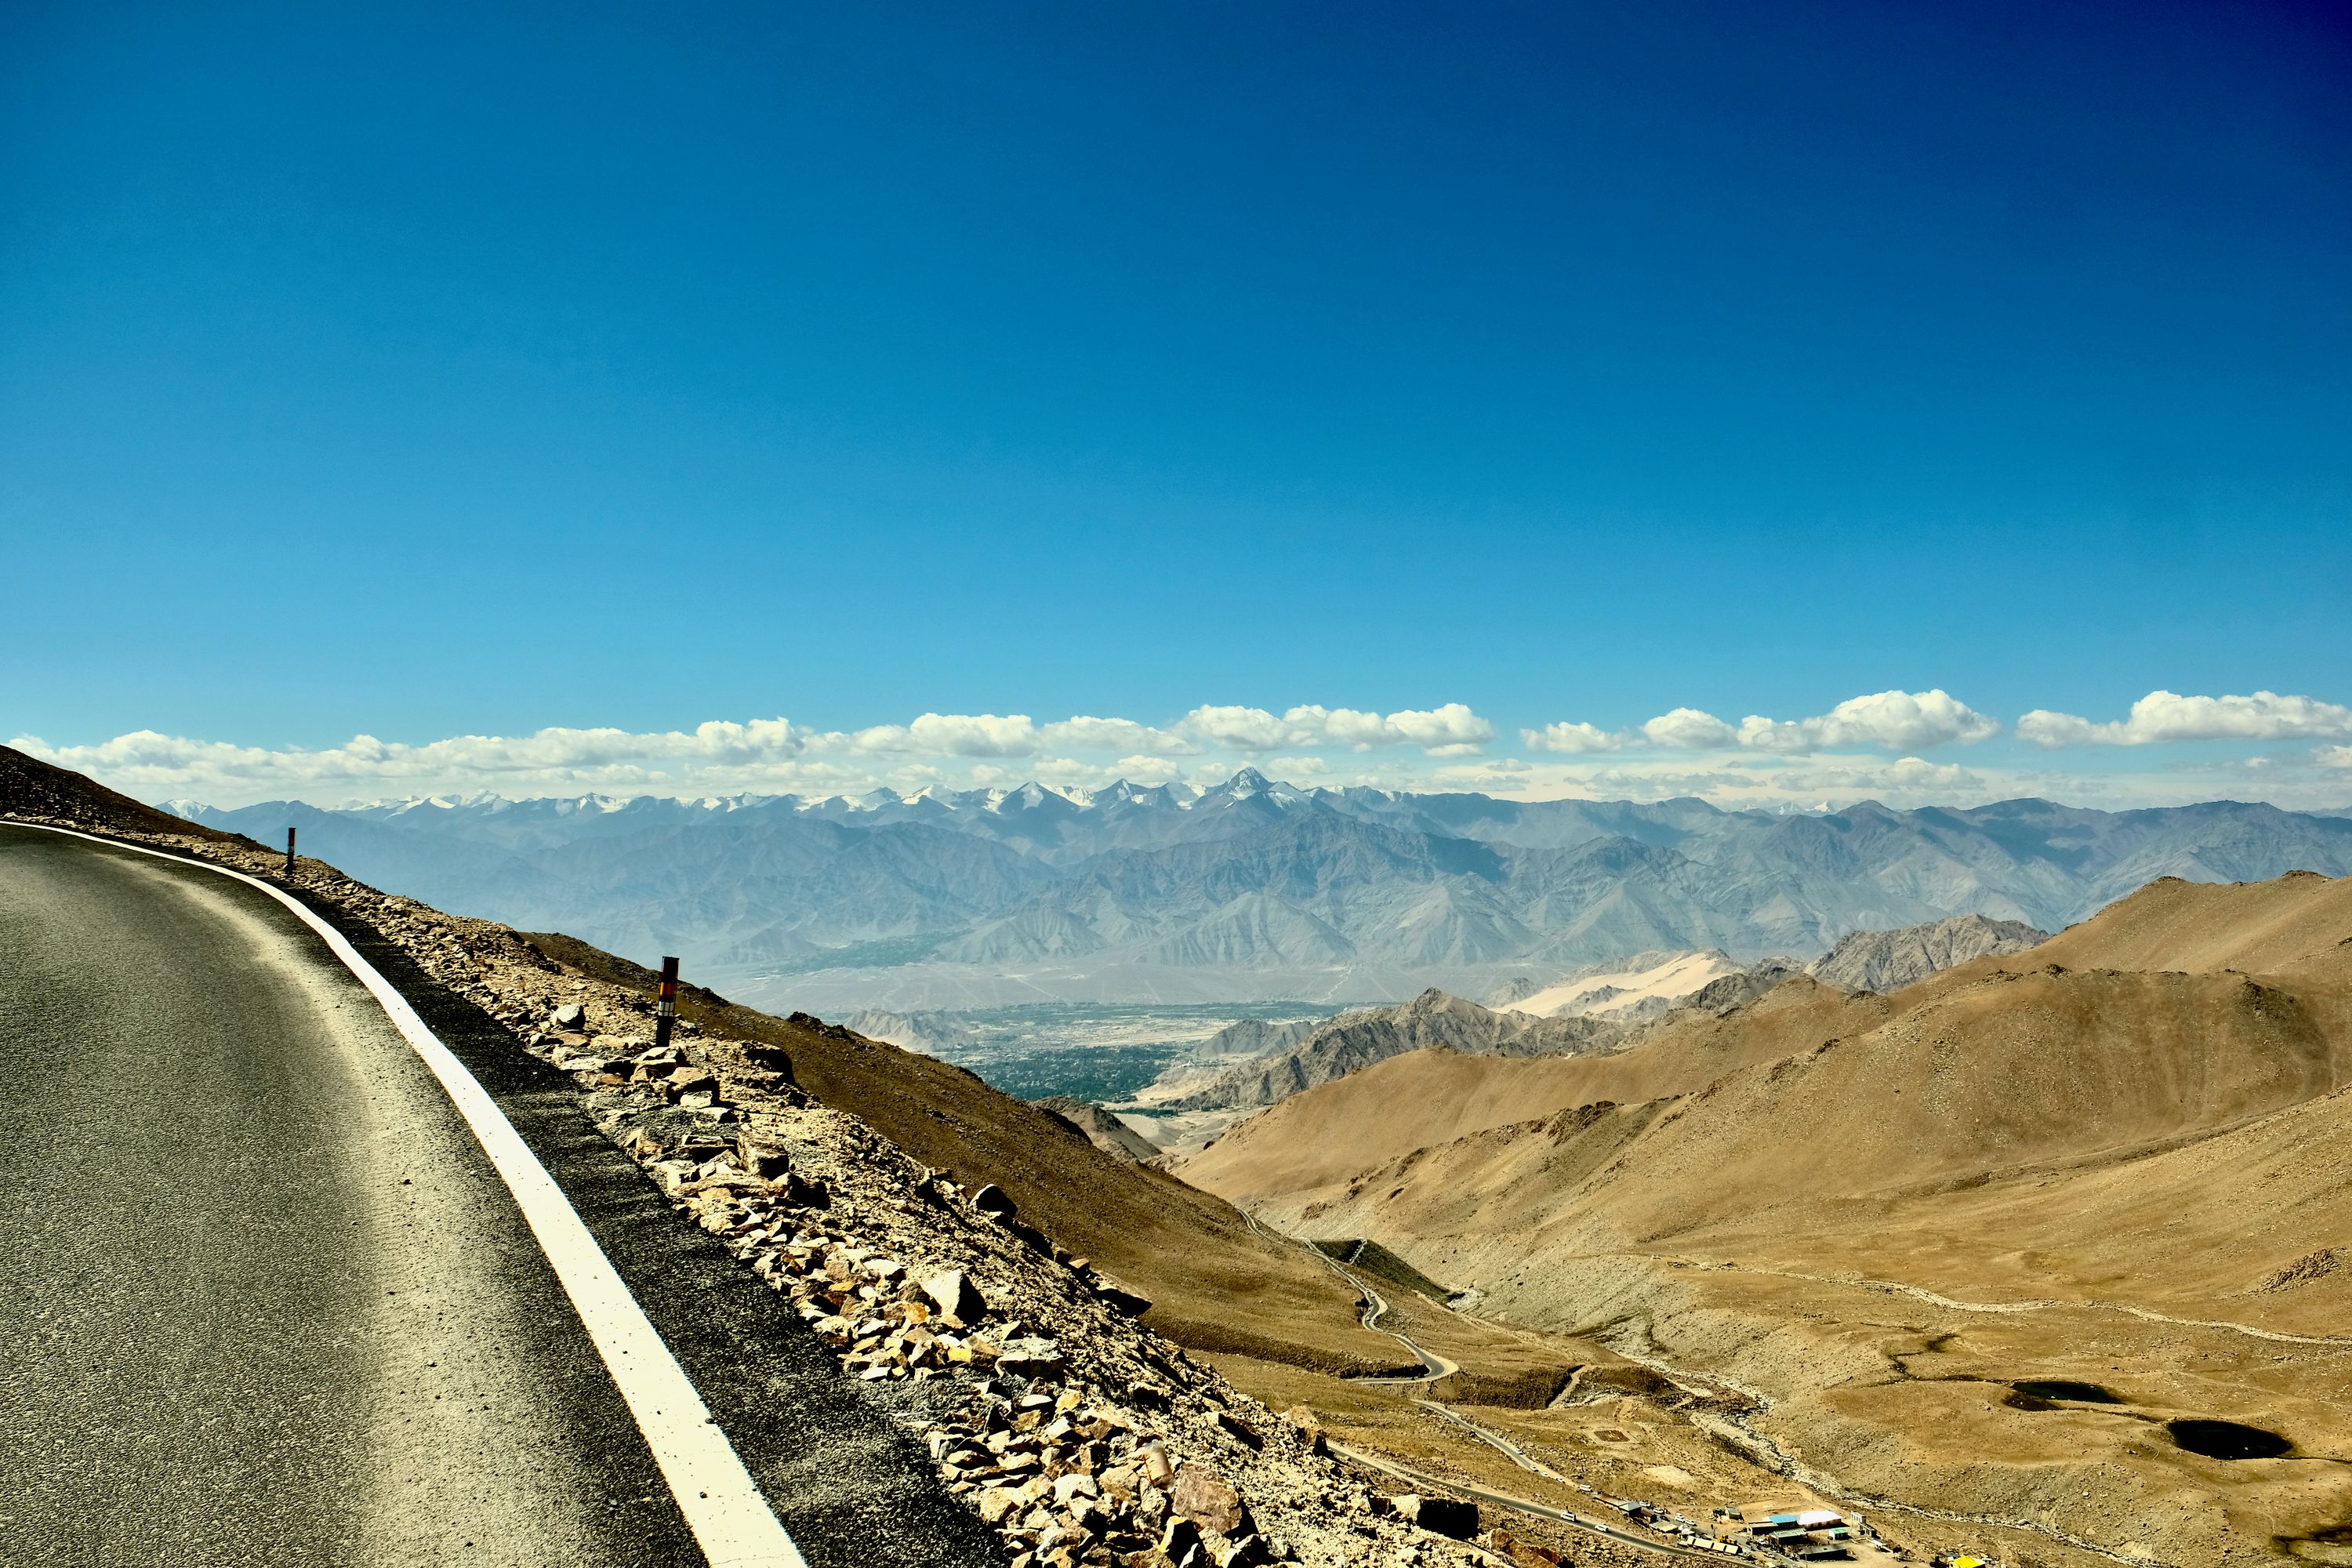 On the way to the Khardung La pass, Ladakh, September 2021.